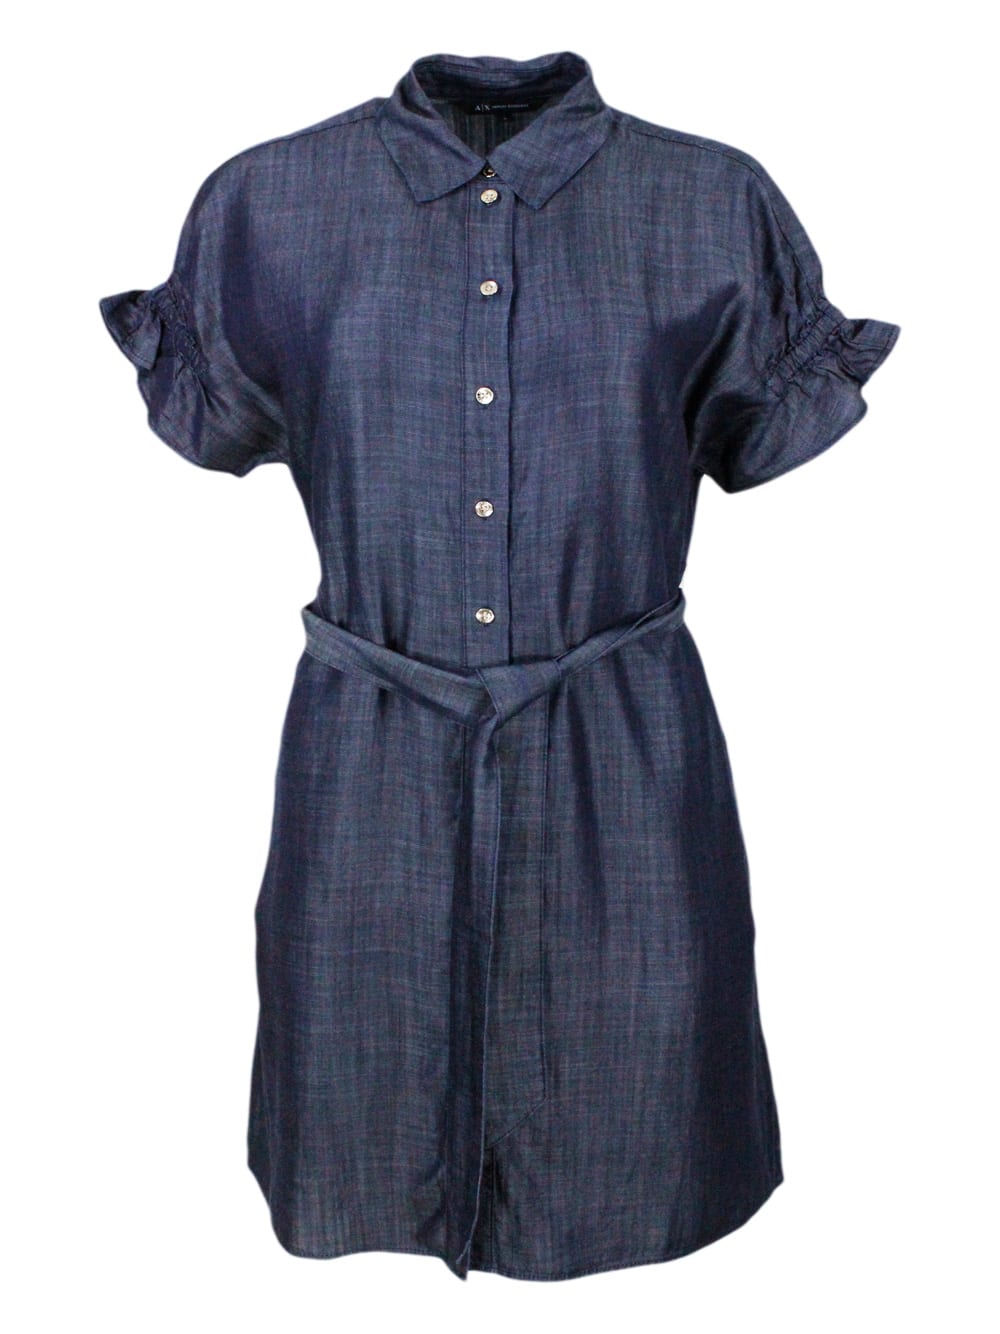 Armani Collezioni Lightweight Denim Dress With Gathered Sleeves With Button Closure And Belt Supplied In Denim Dark